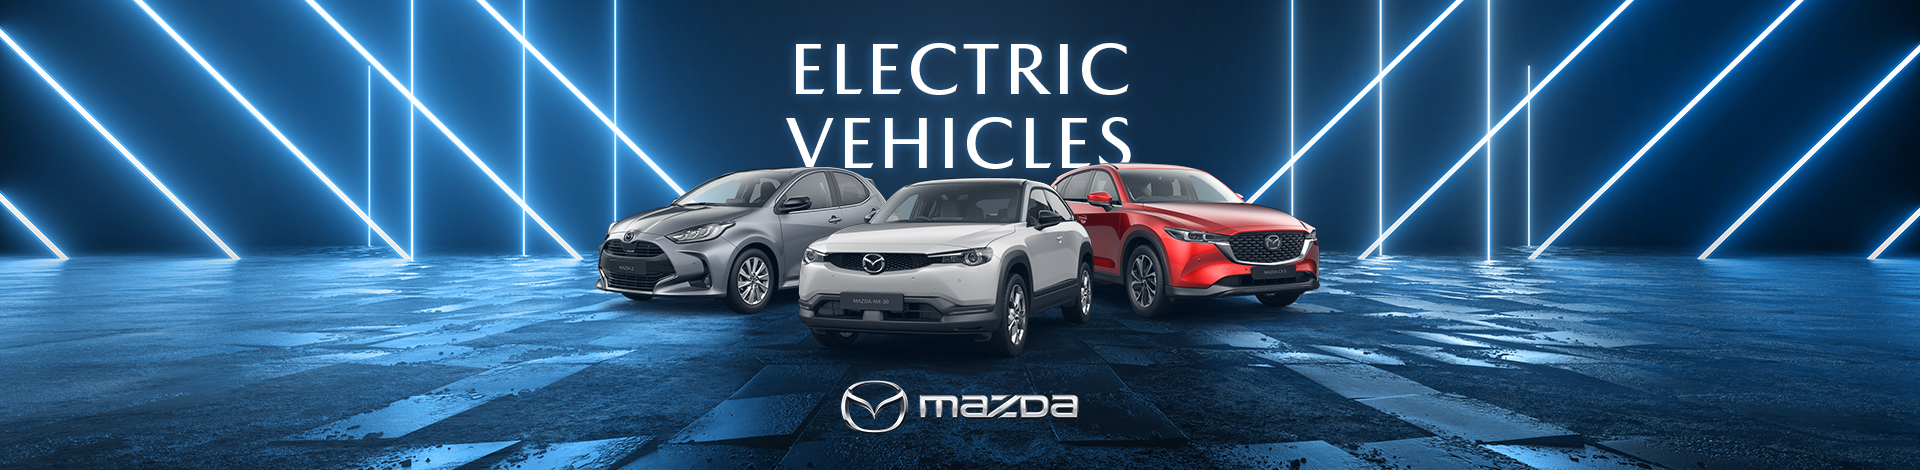 Mazda Hybrid and Electric Range